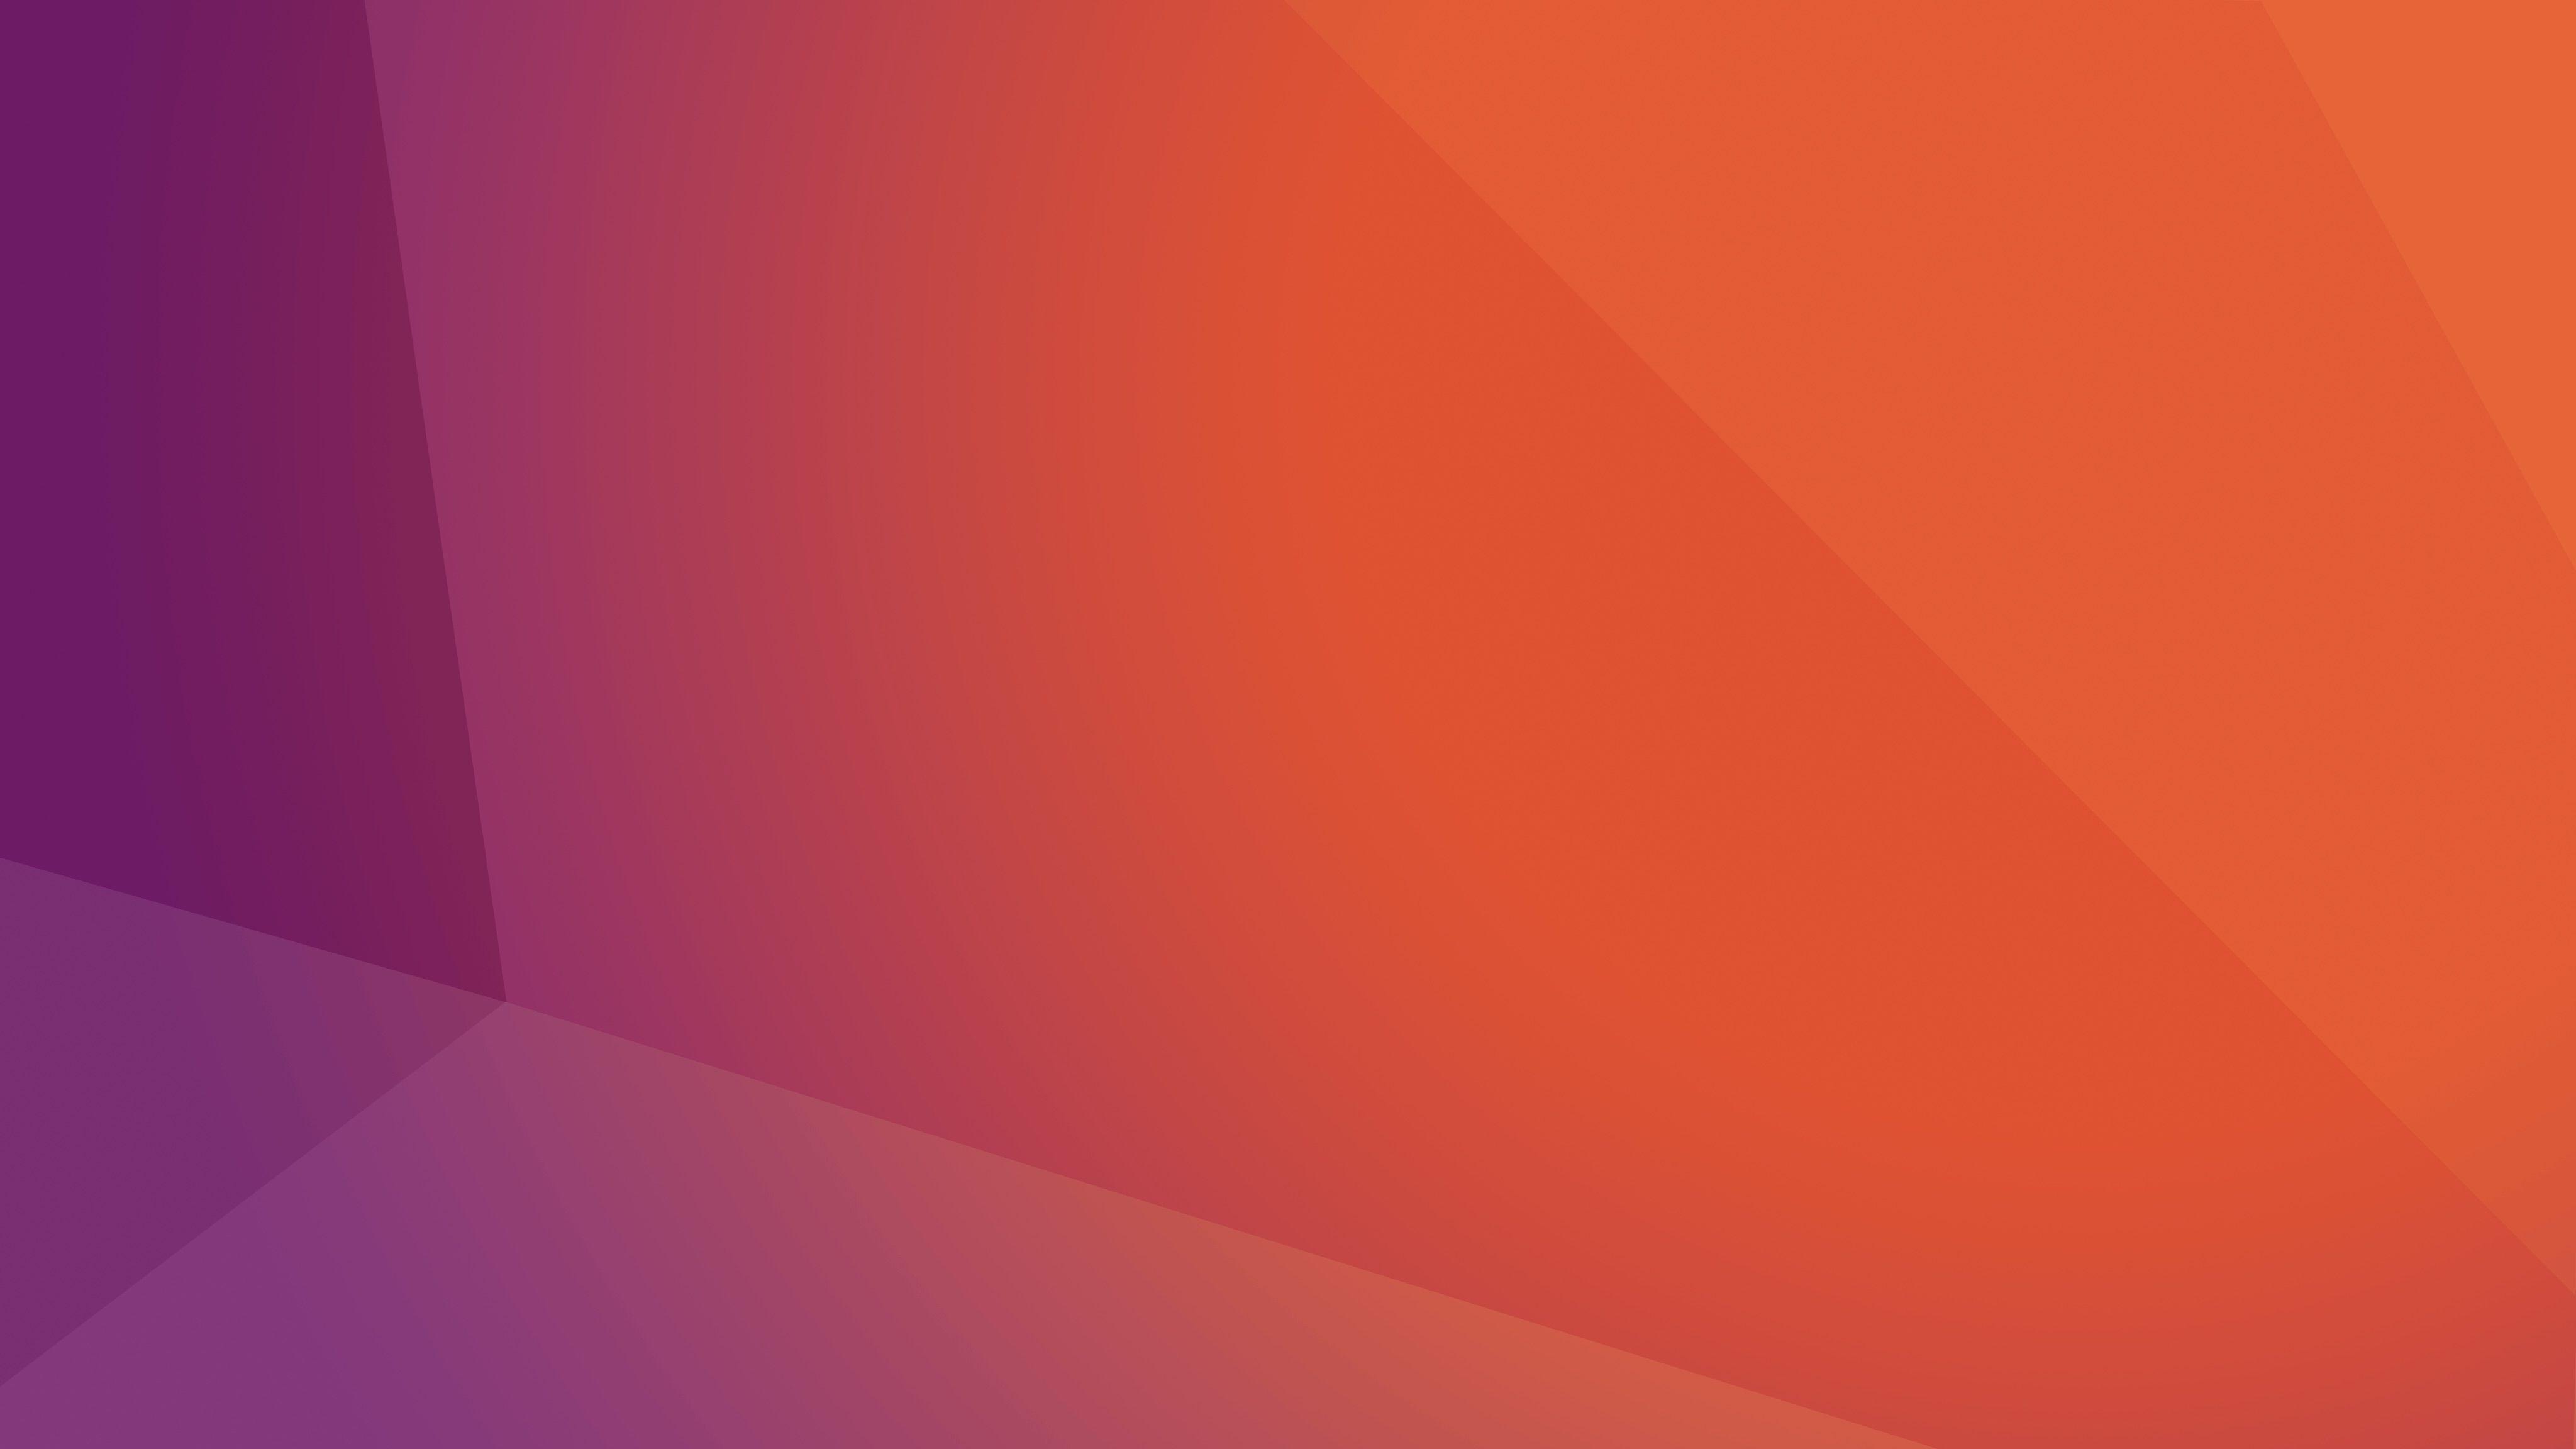 Meet The New Default Wallpaper of Ubuntu 16.10! Ubuntu!